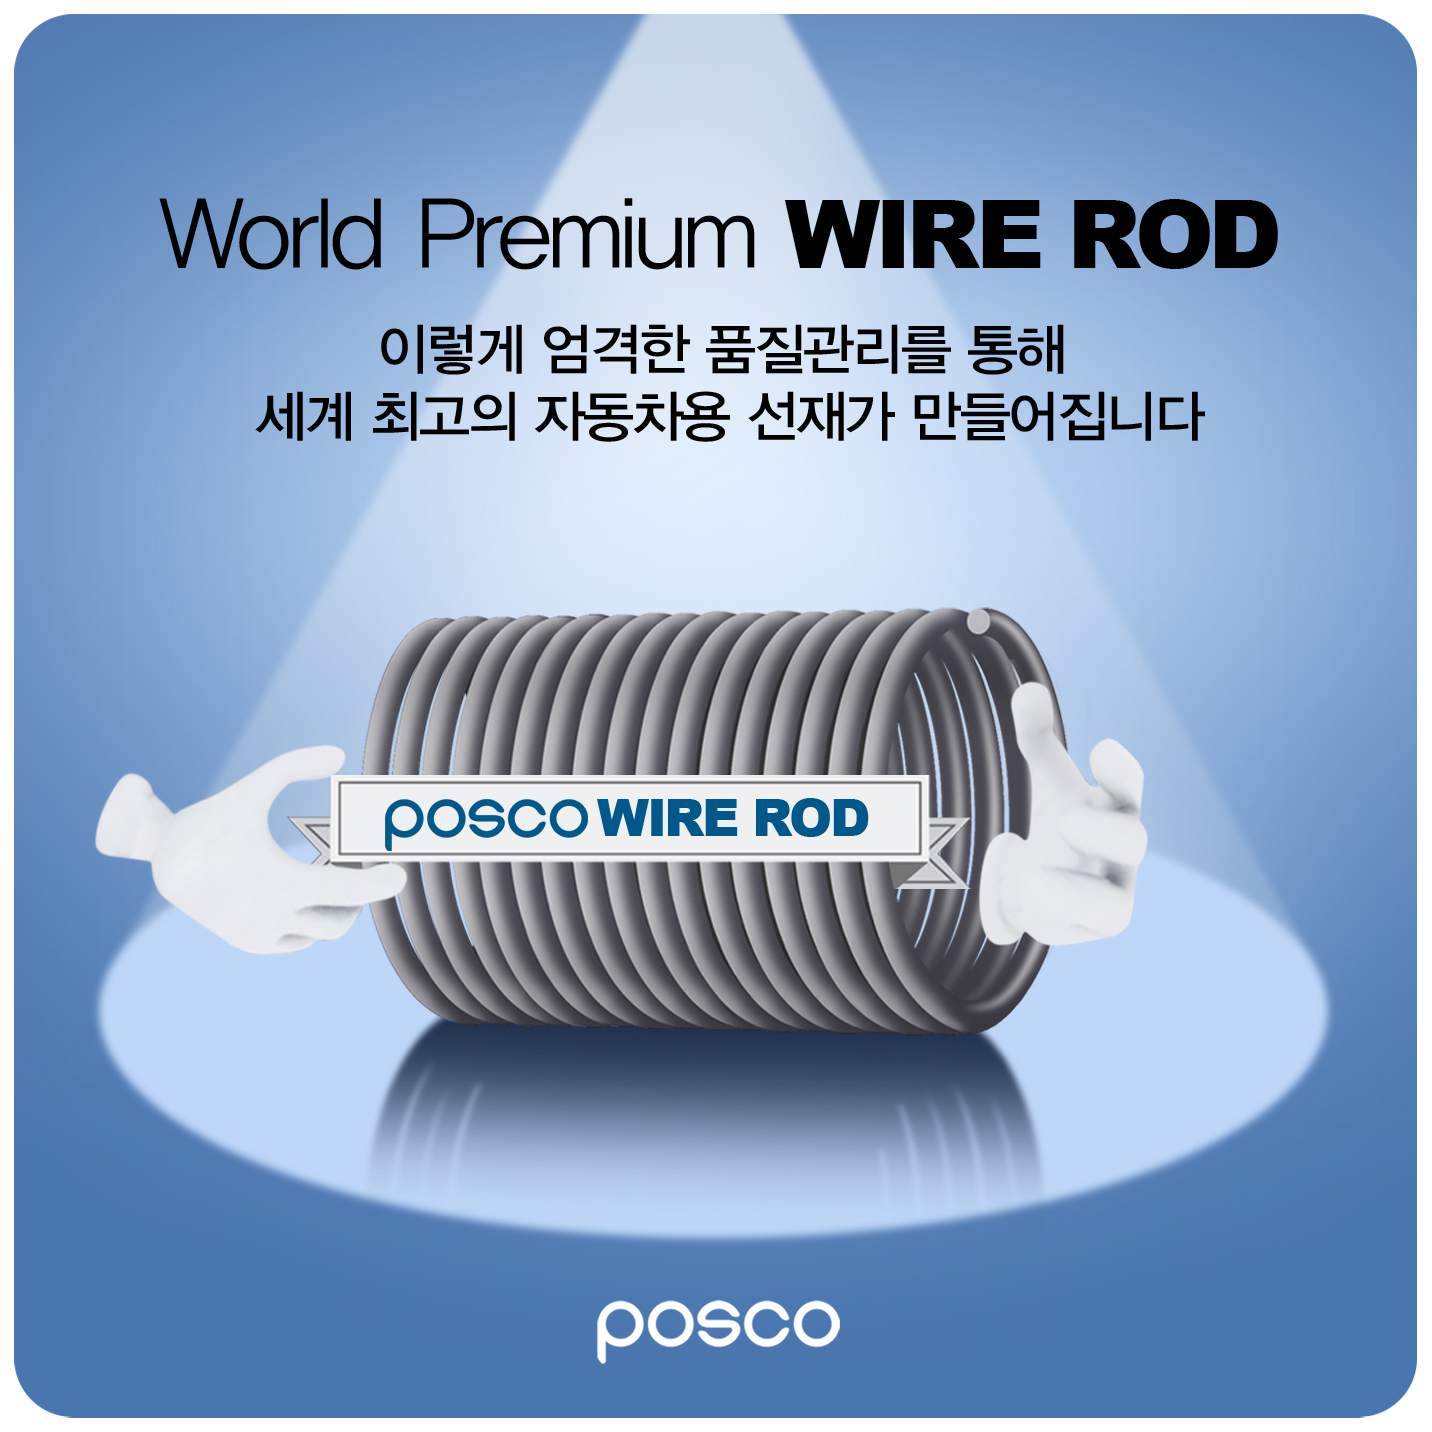 world premium wire rod 이렇게 엄격한 품질관리를 통해 세계 최고의 자동차용 선재가 만들어집니다 POSCO WIRE ROD POSCO